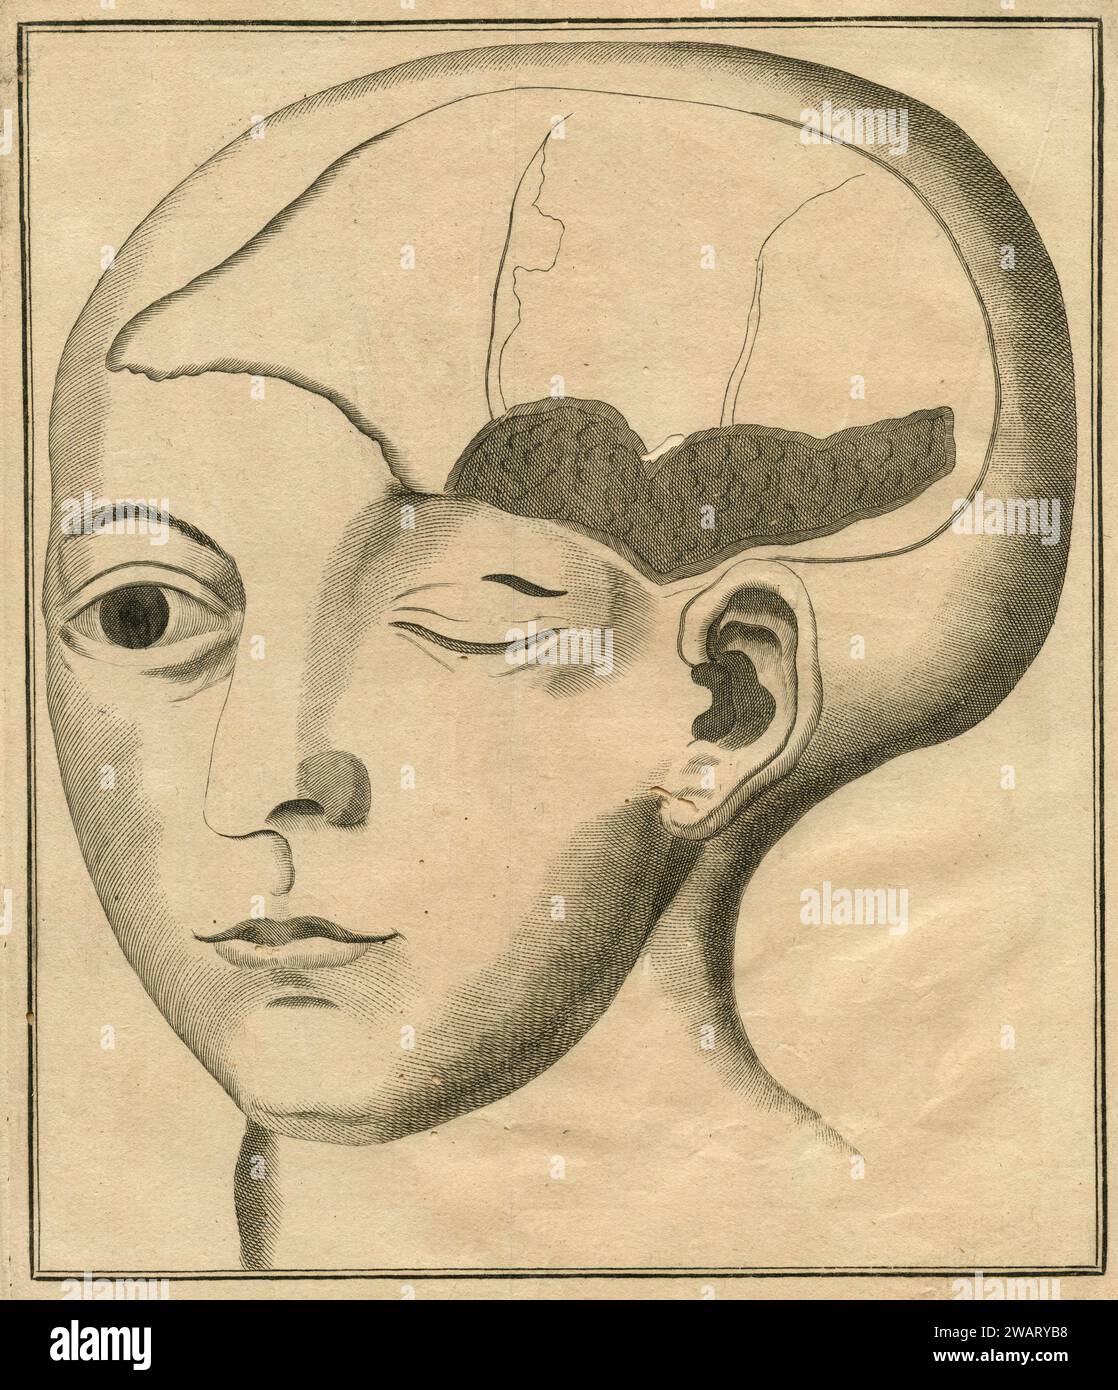 Vintage anatomy drawing: Deformed human head, Transation Philosophique, France 1700s Stock Photo